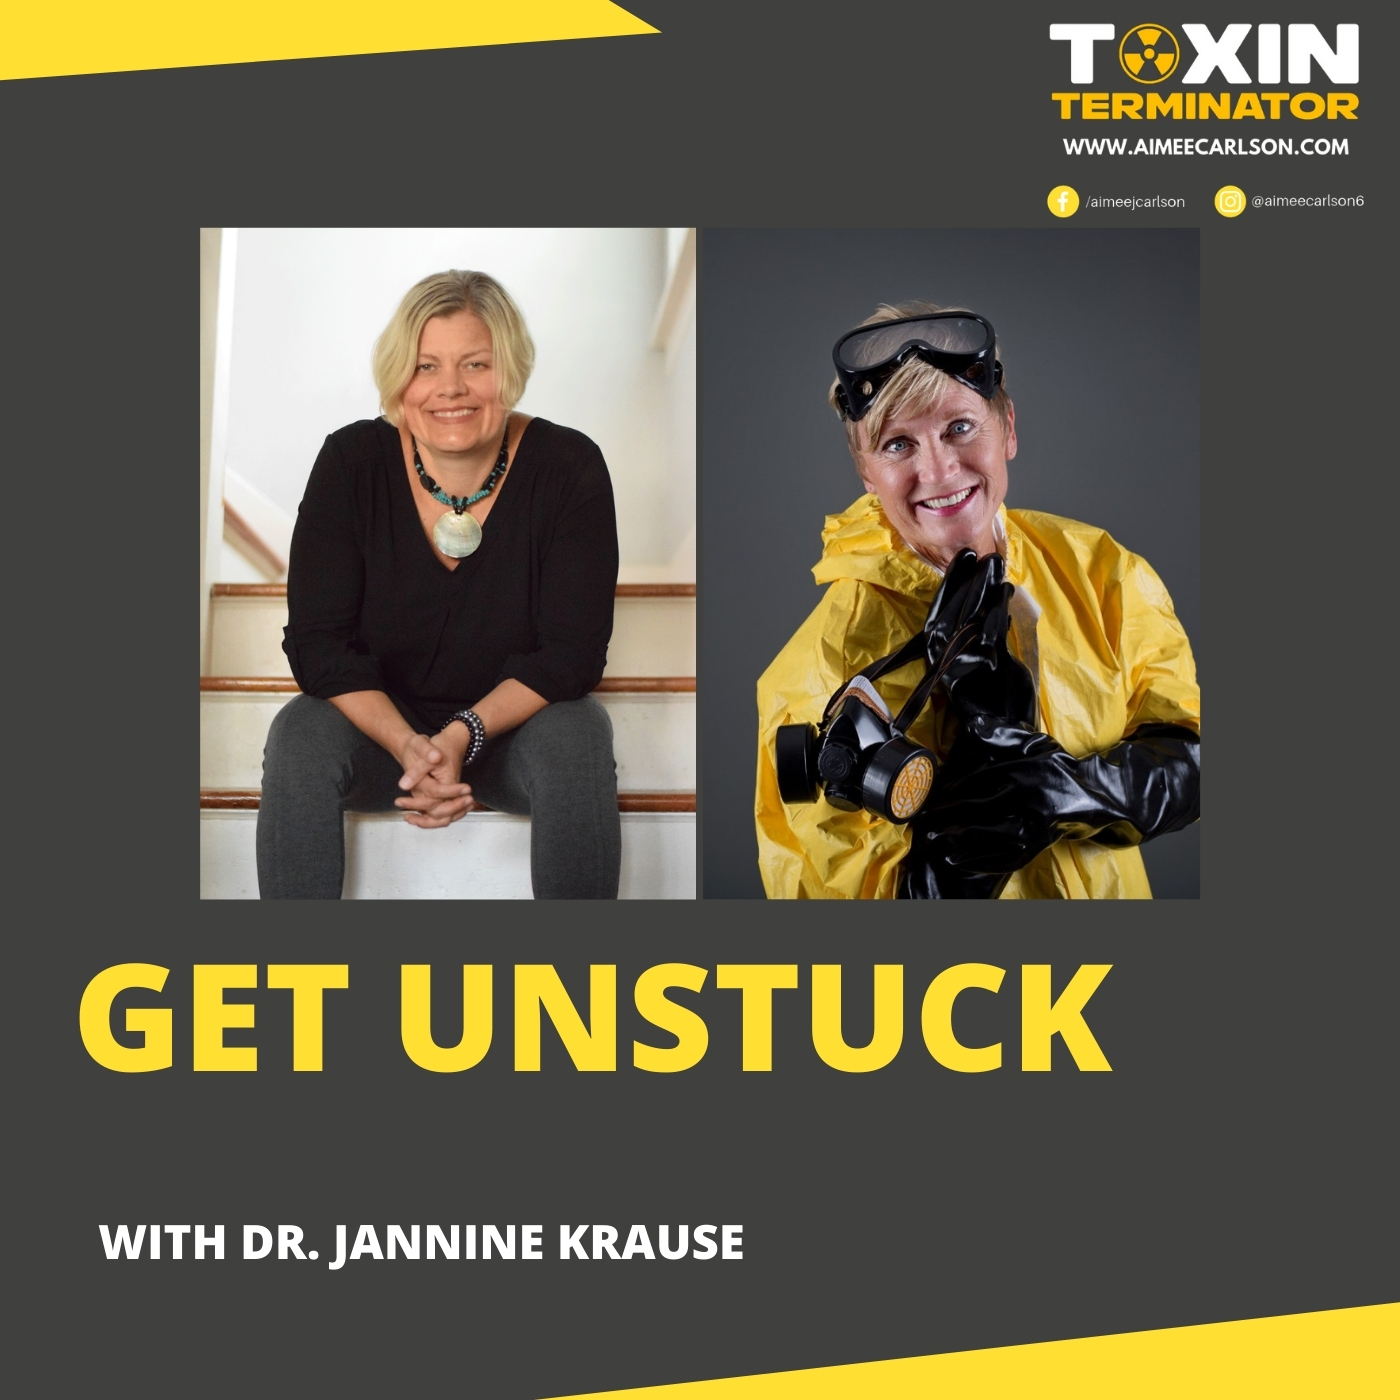 Get Unstuck with Dr. Jannine Krause